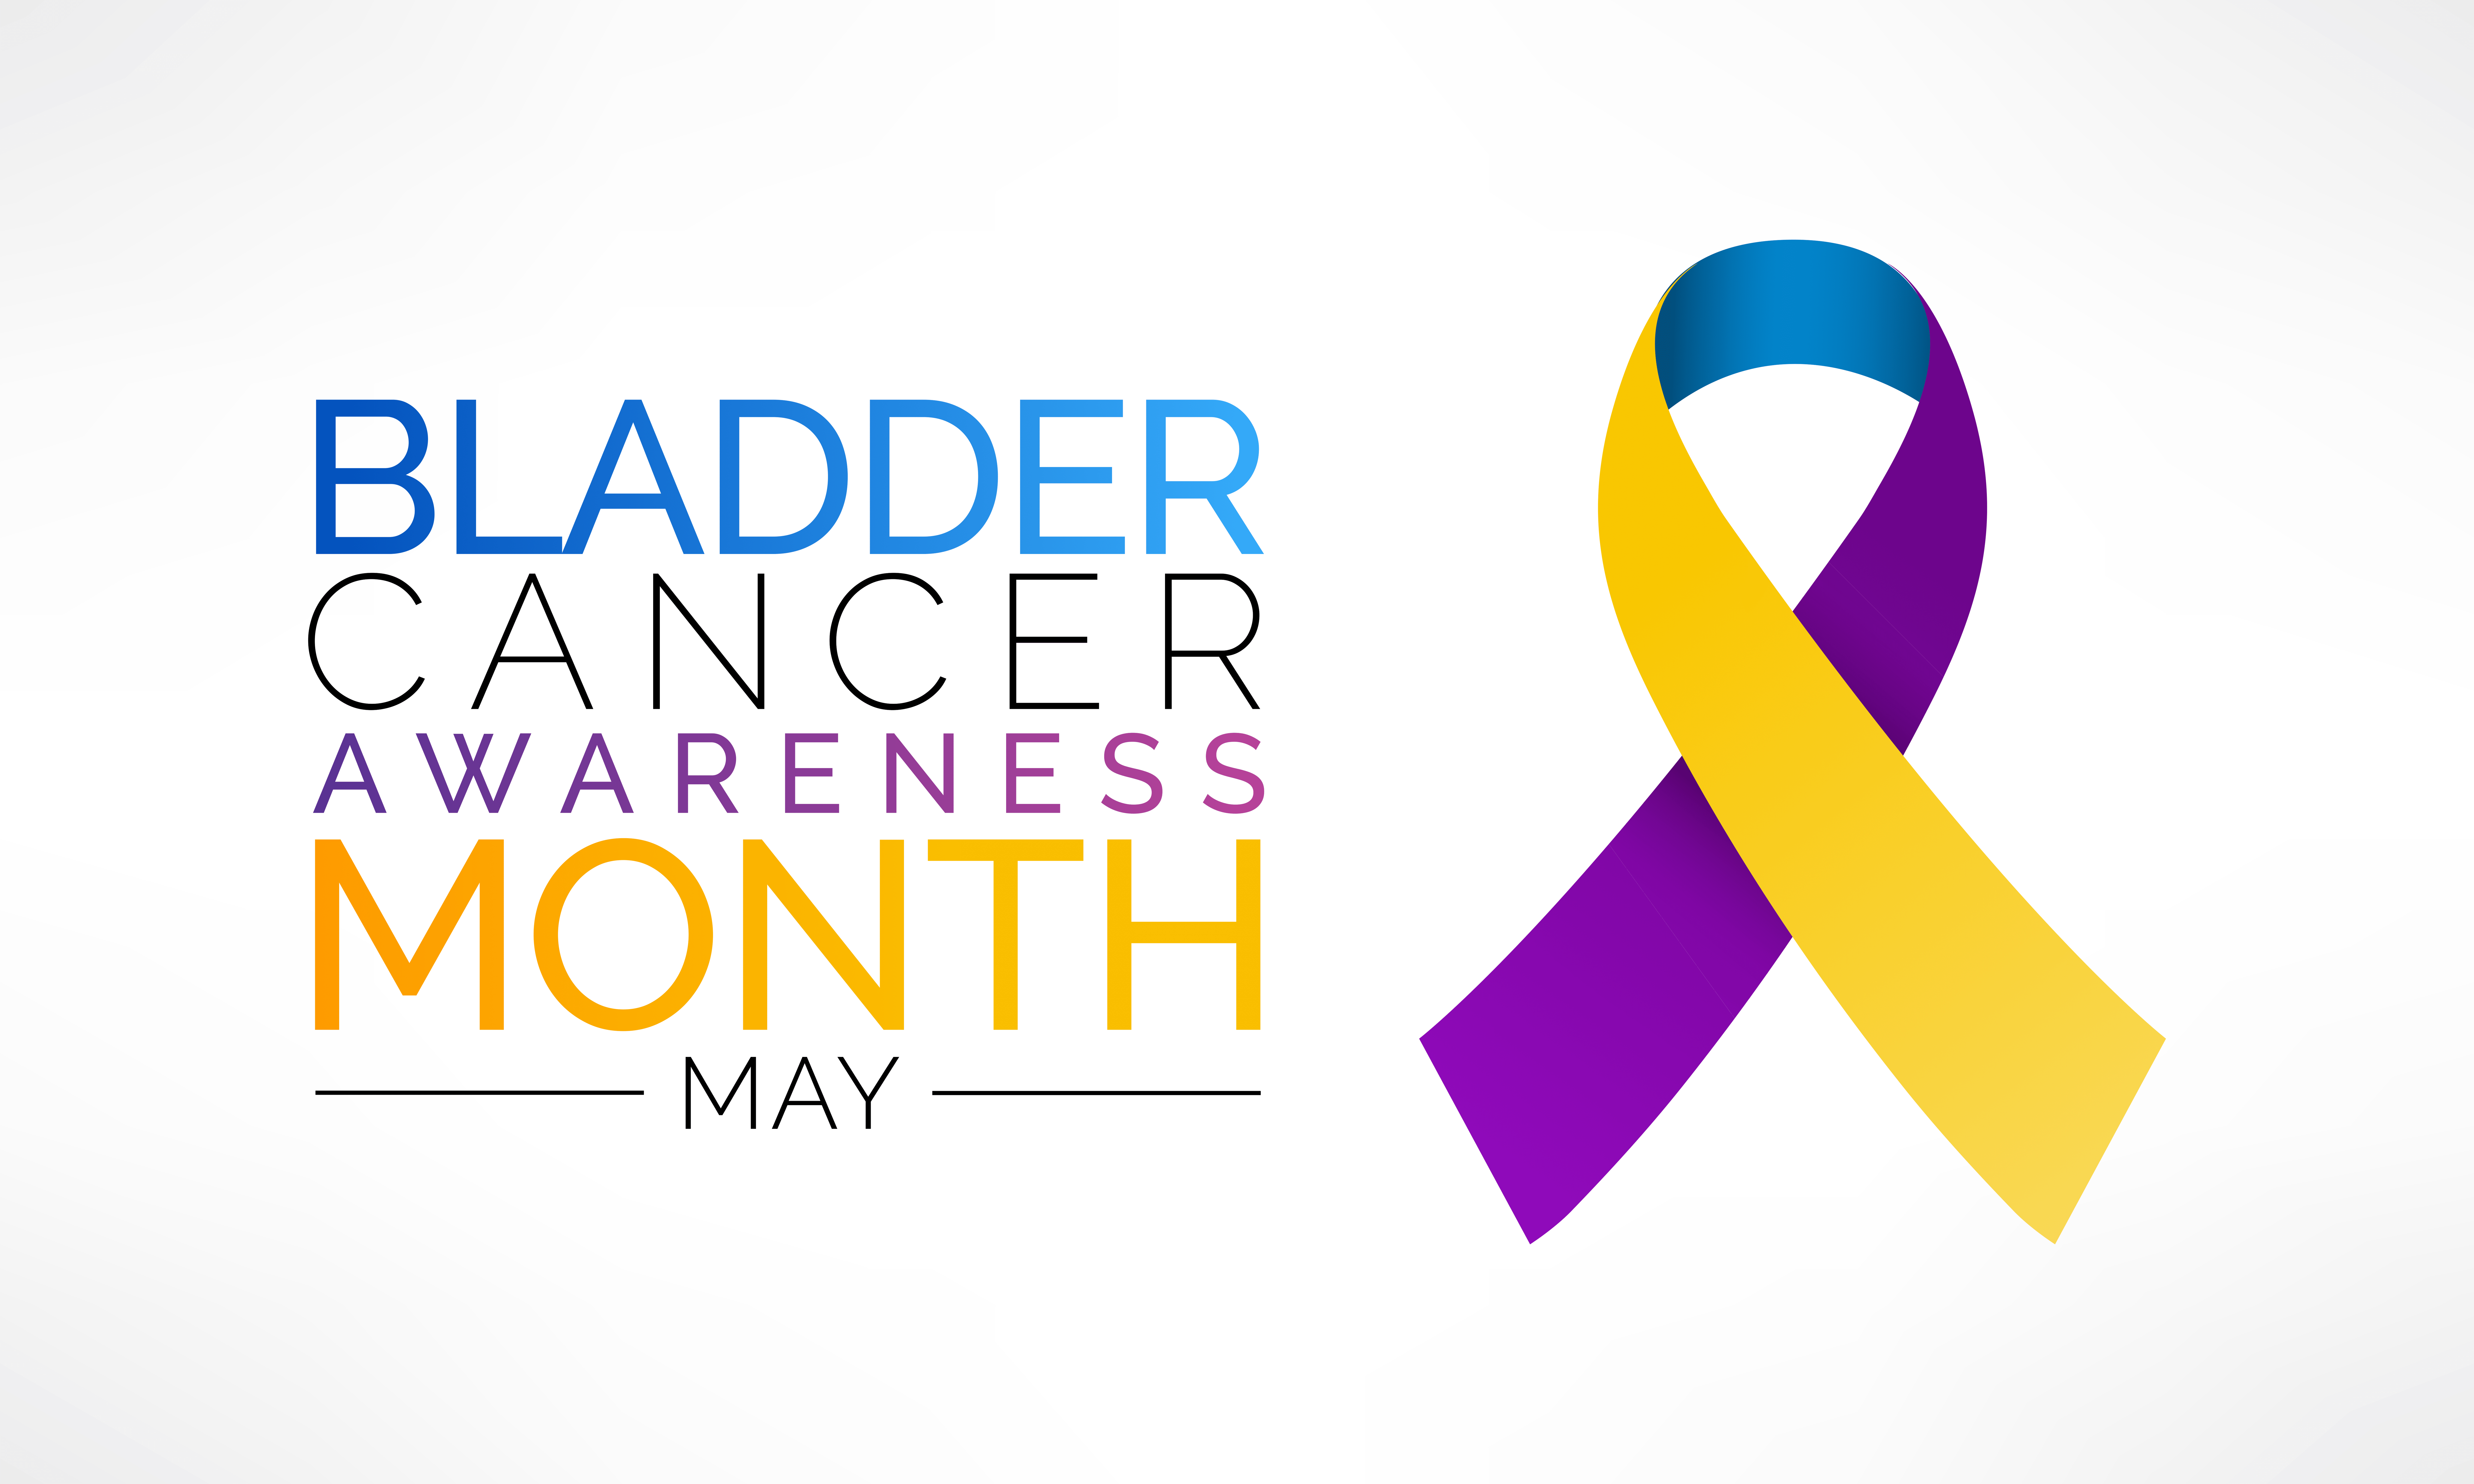 Information for Bladder Cancer Awareness Month in Monroeville, PA